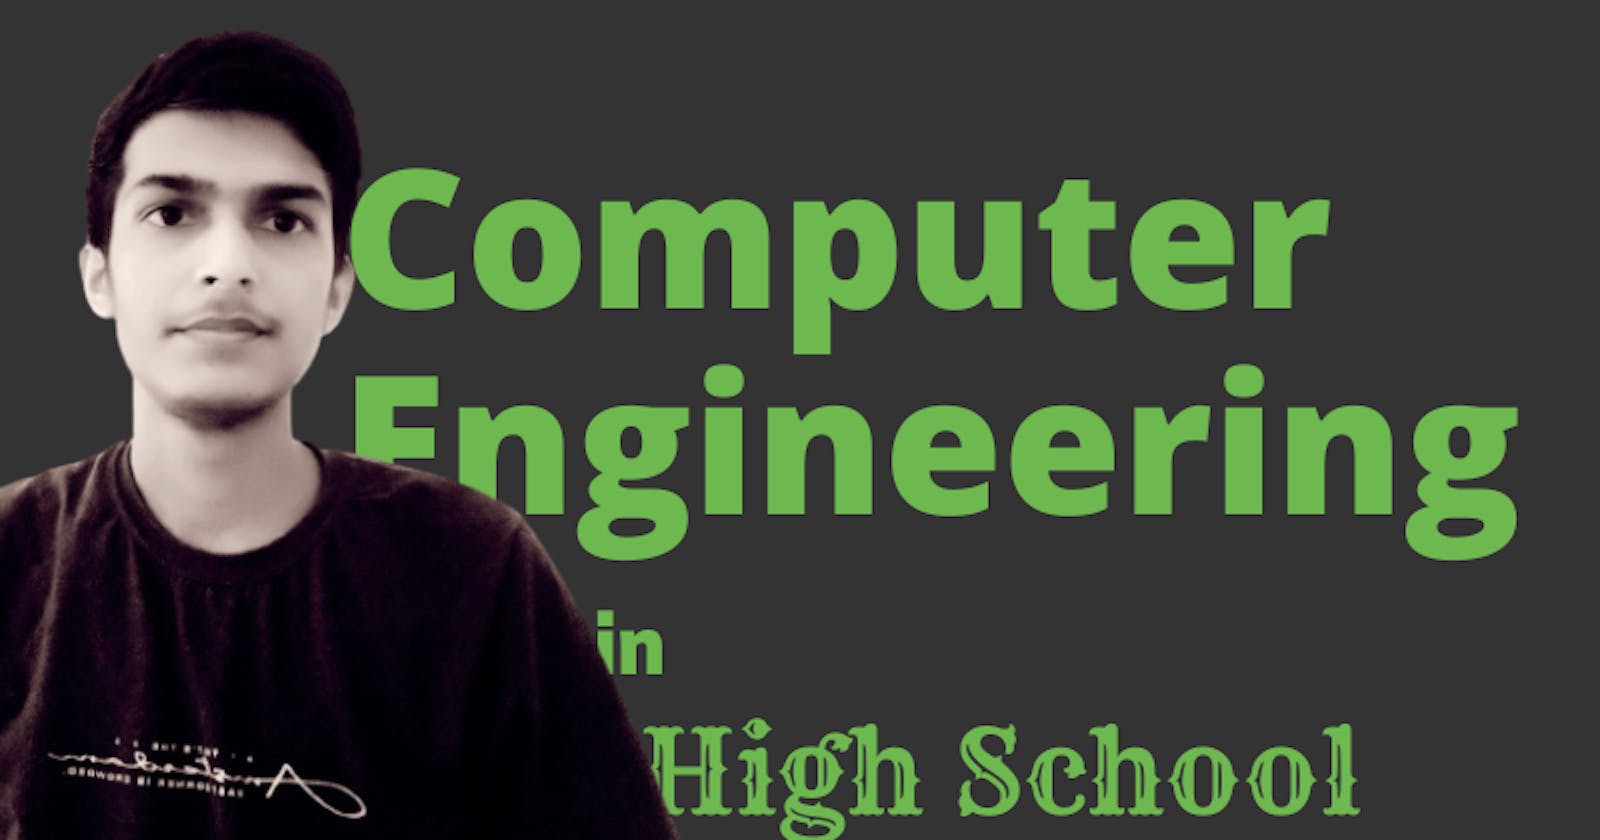 Studying Computer Engineering in High School